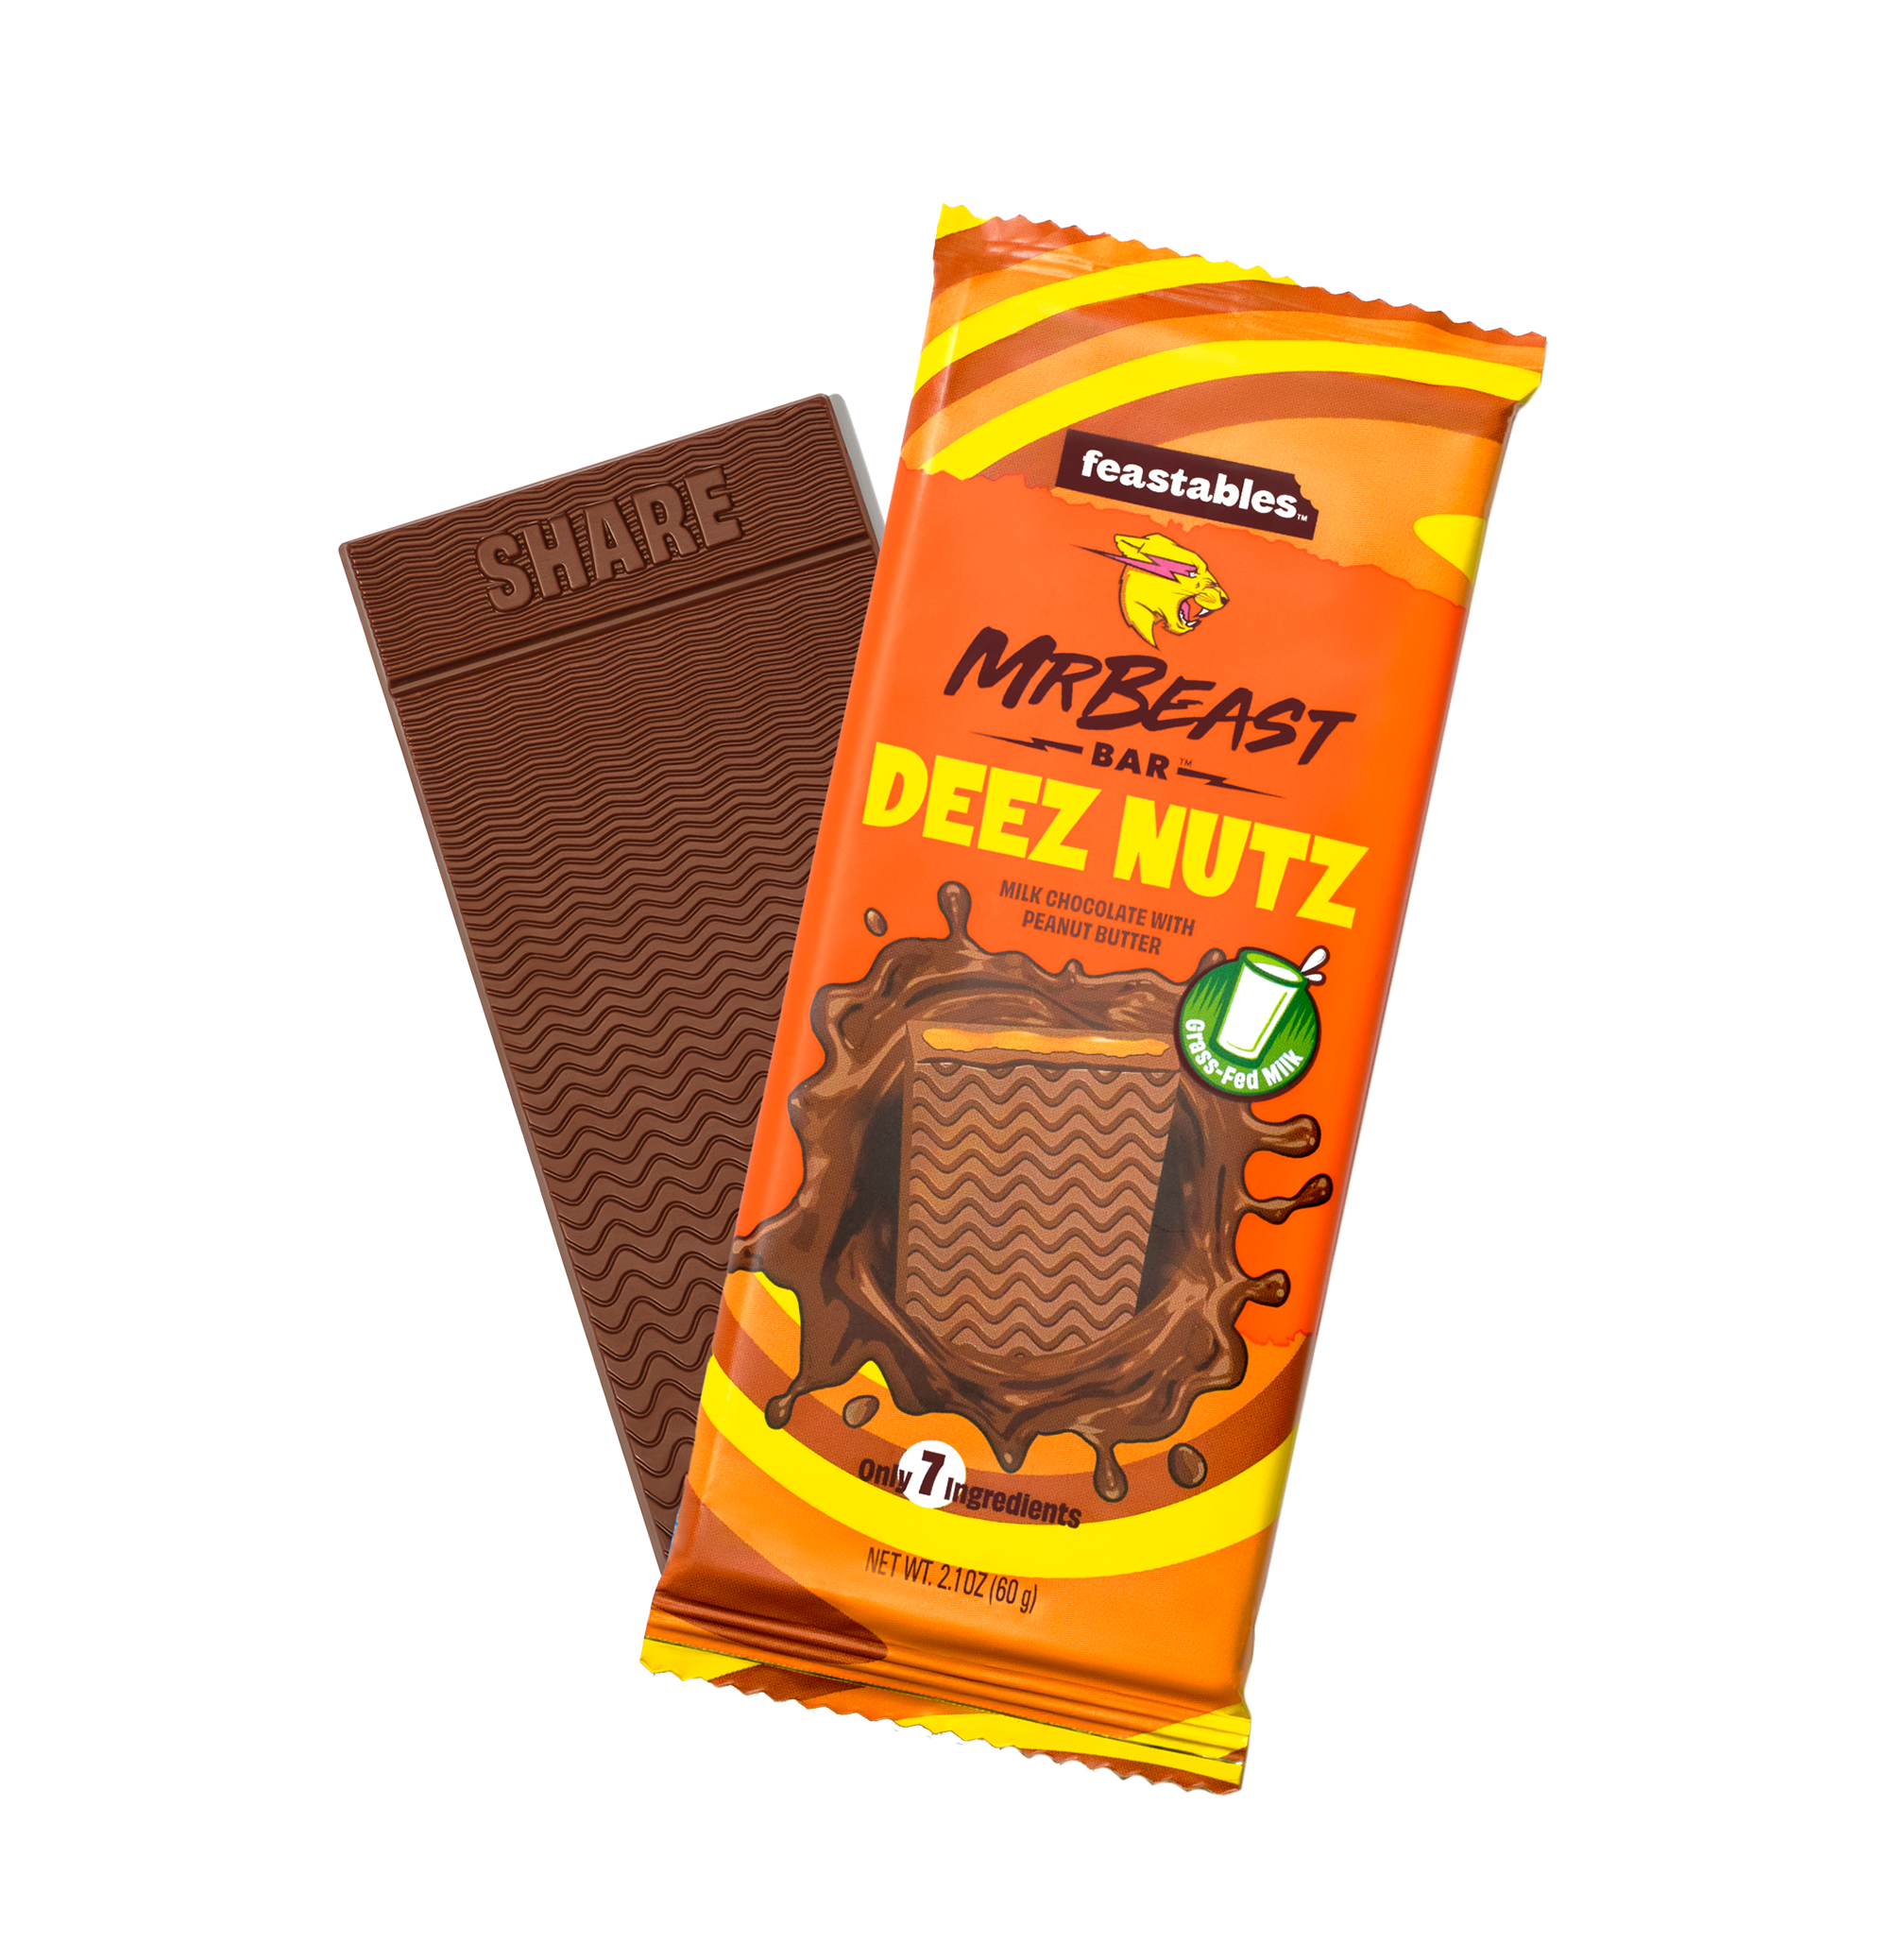 Mr Beast Feastables Chocolate Bars YOU PICK ITEM (FREE USA